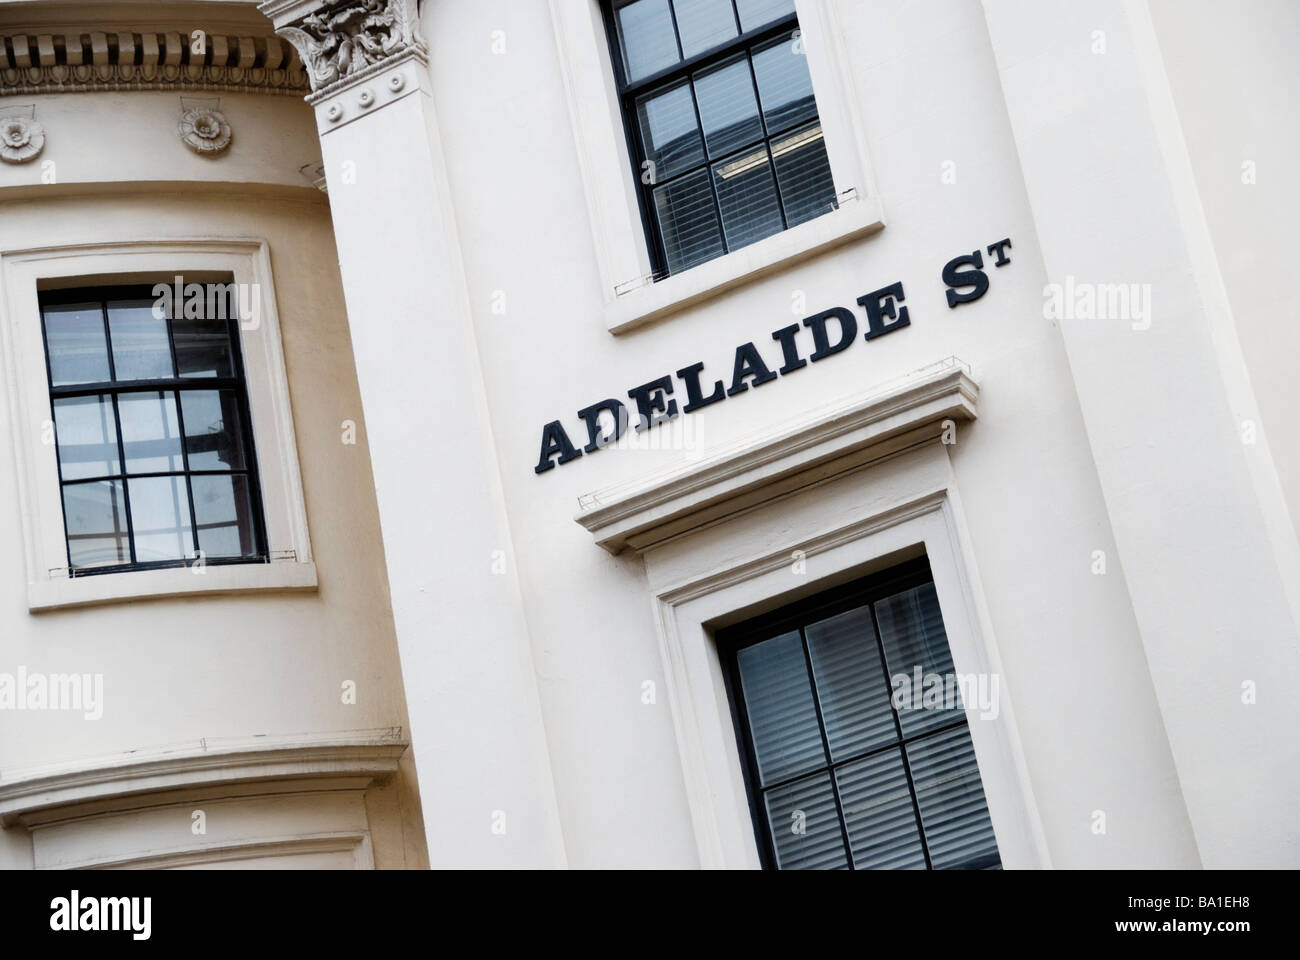 Adelaide Street in der Nähe von Trafalgar Square in London Stockfoto